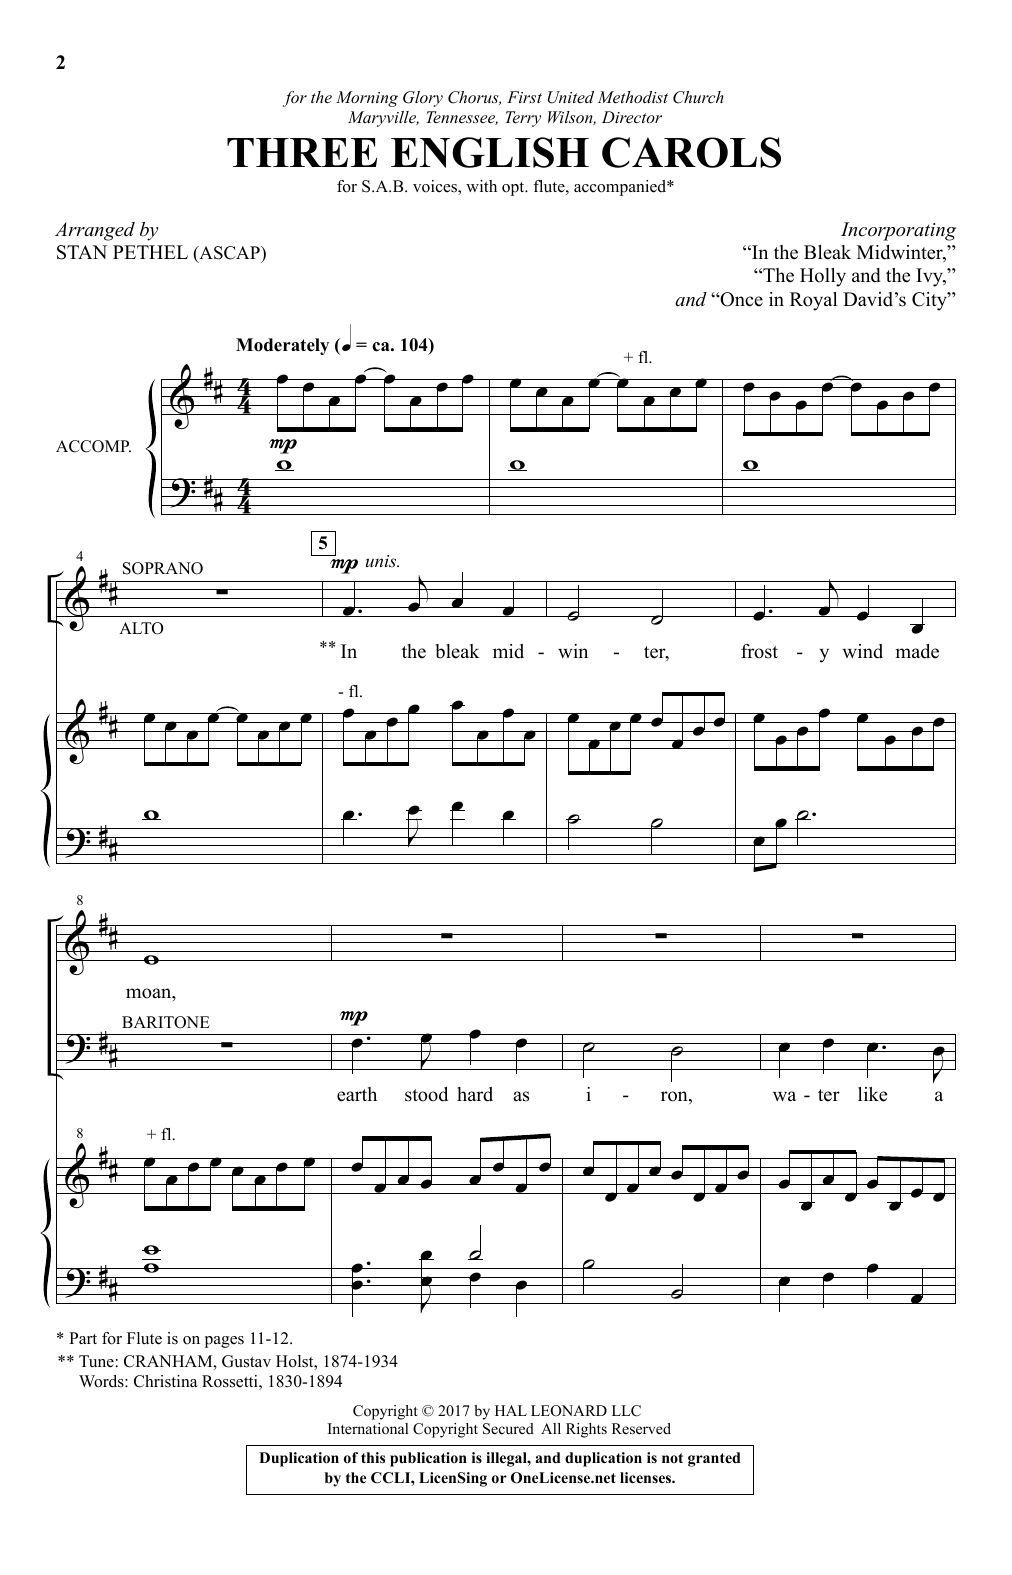 Stan Pethel Three English Carols Sheet Music Notes & Chords for SAB - Download or Print PDF